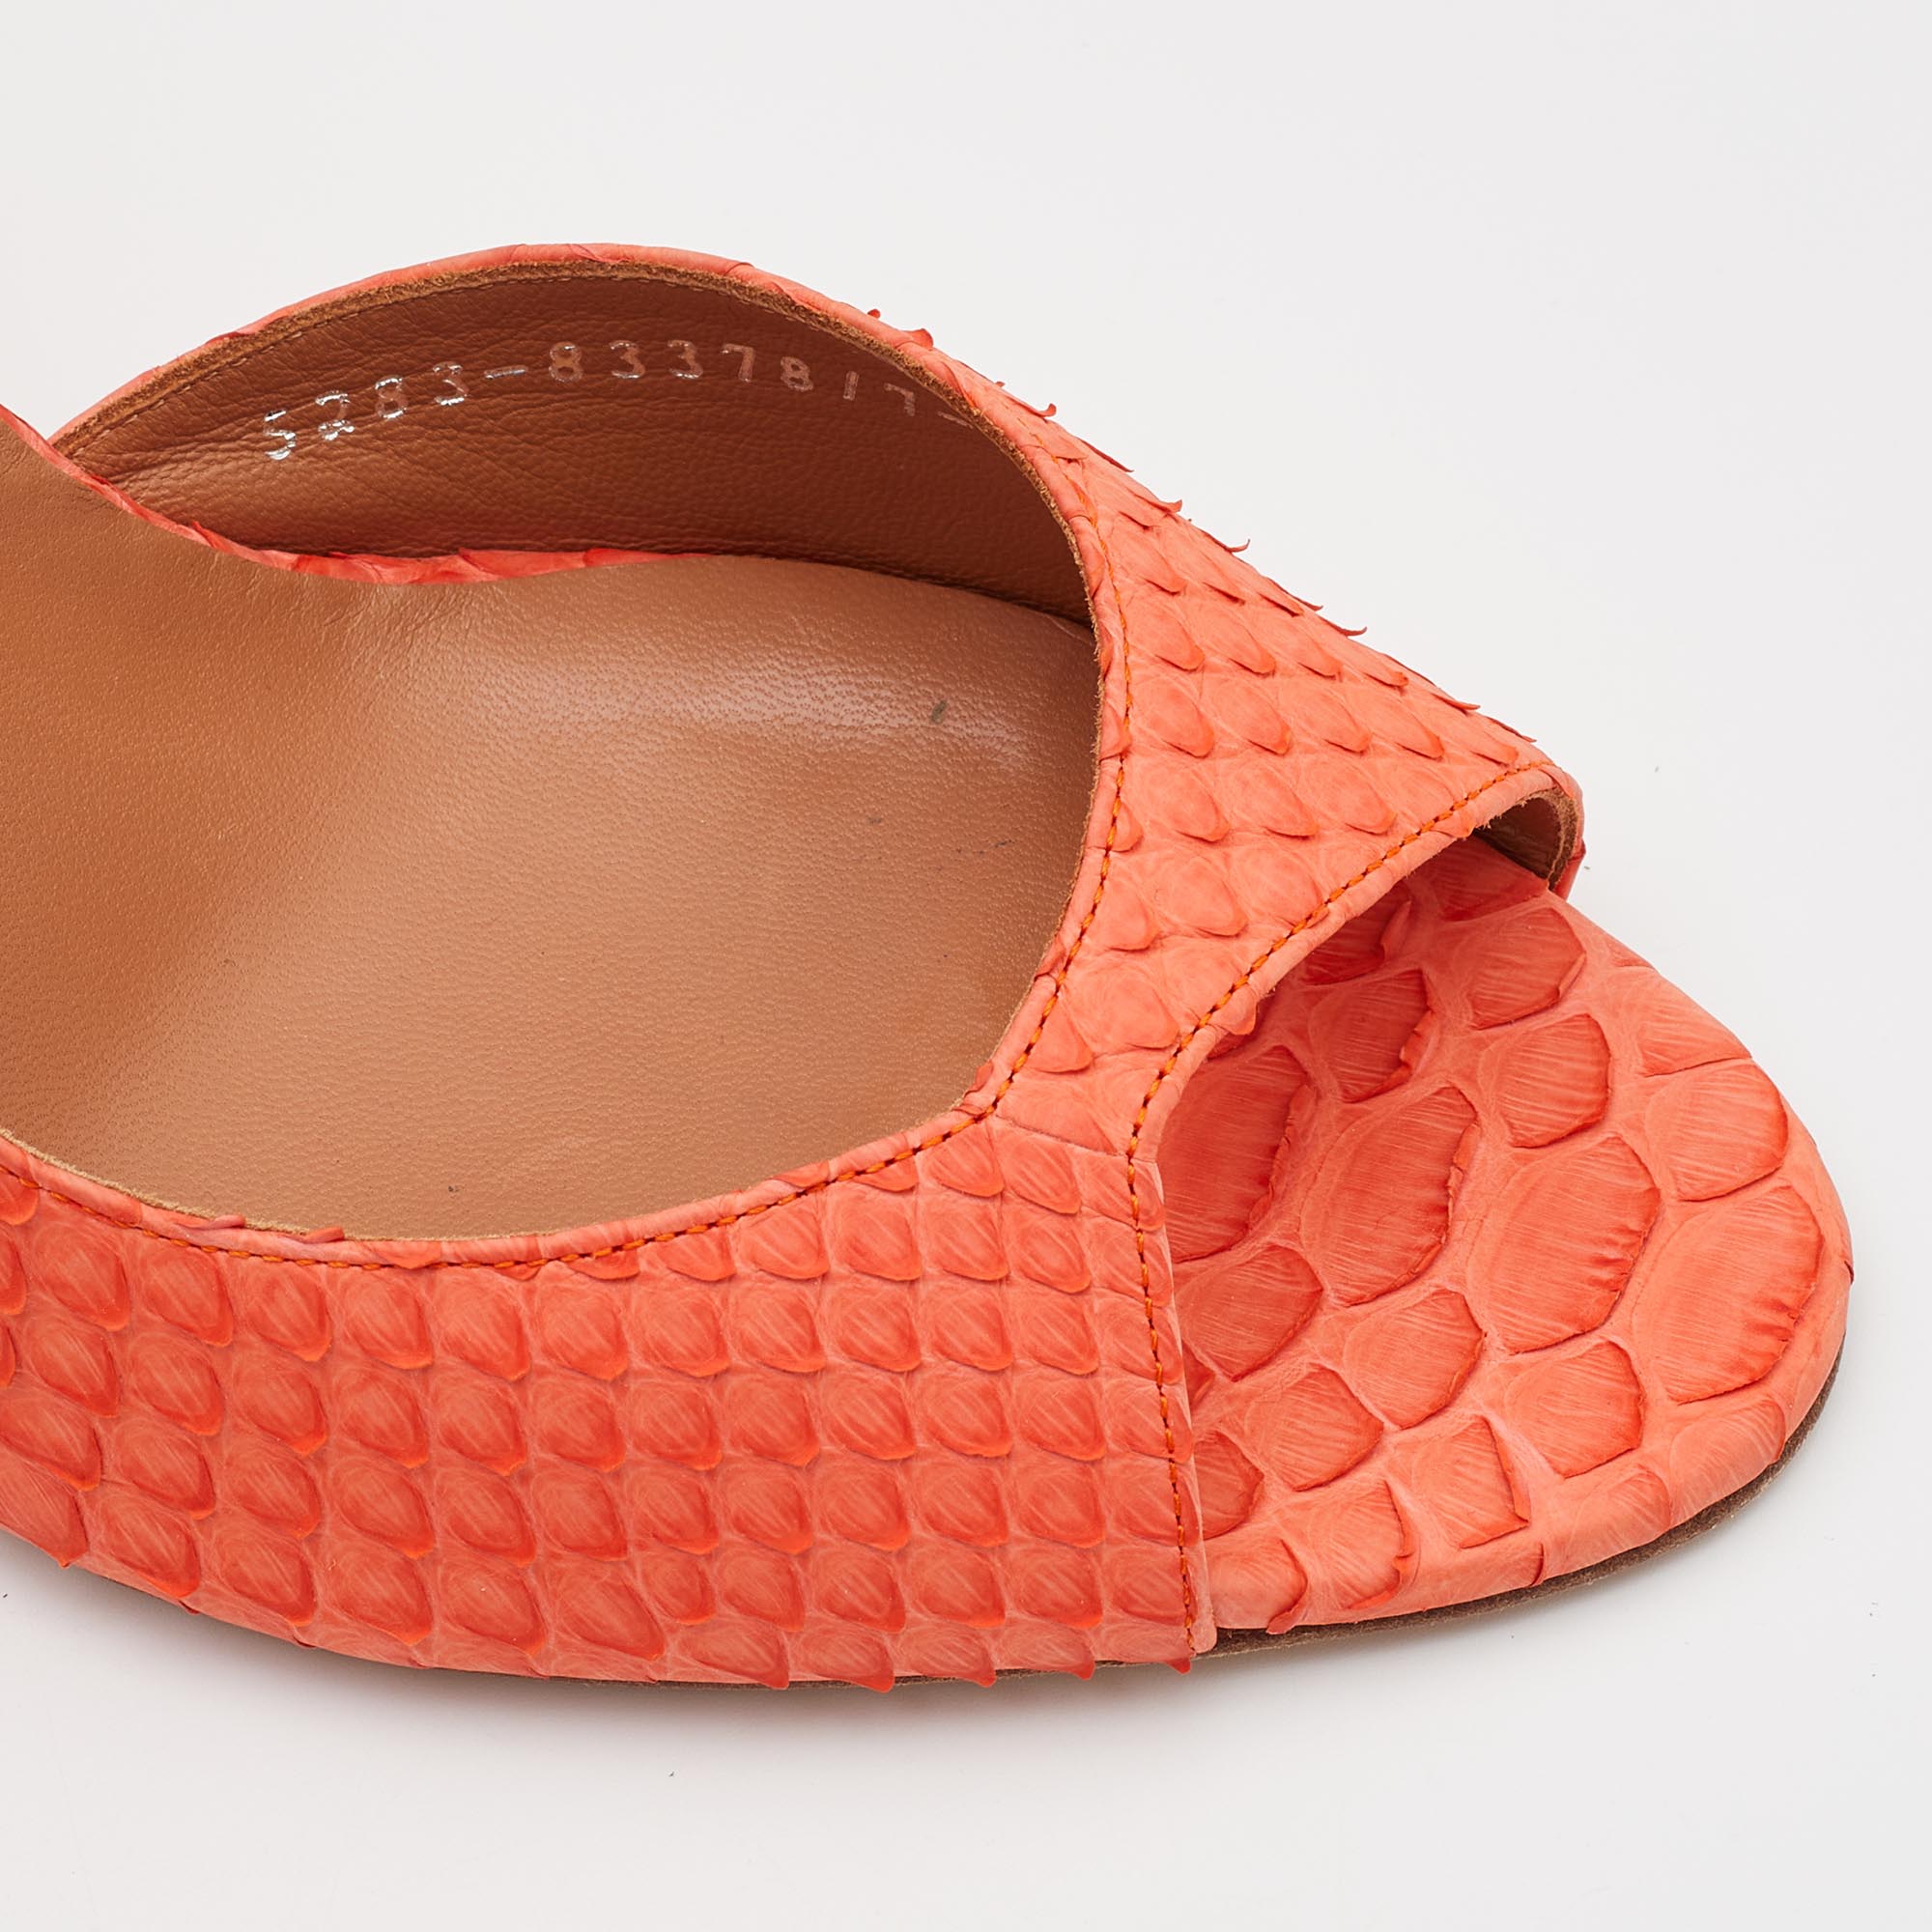 Gina Tangerine Python Peep Toe Ankle Strap Sandals Size 40